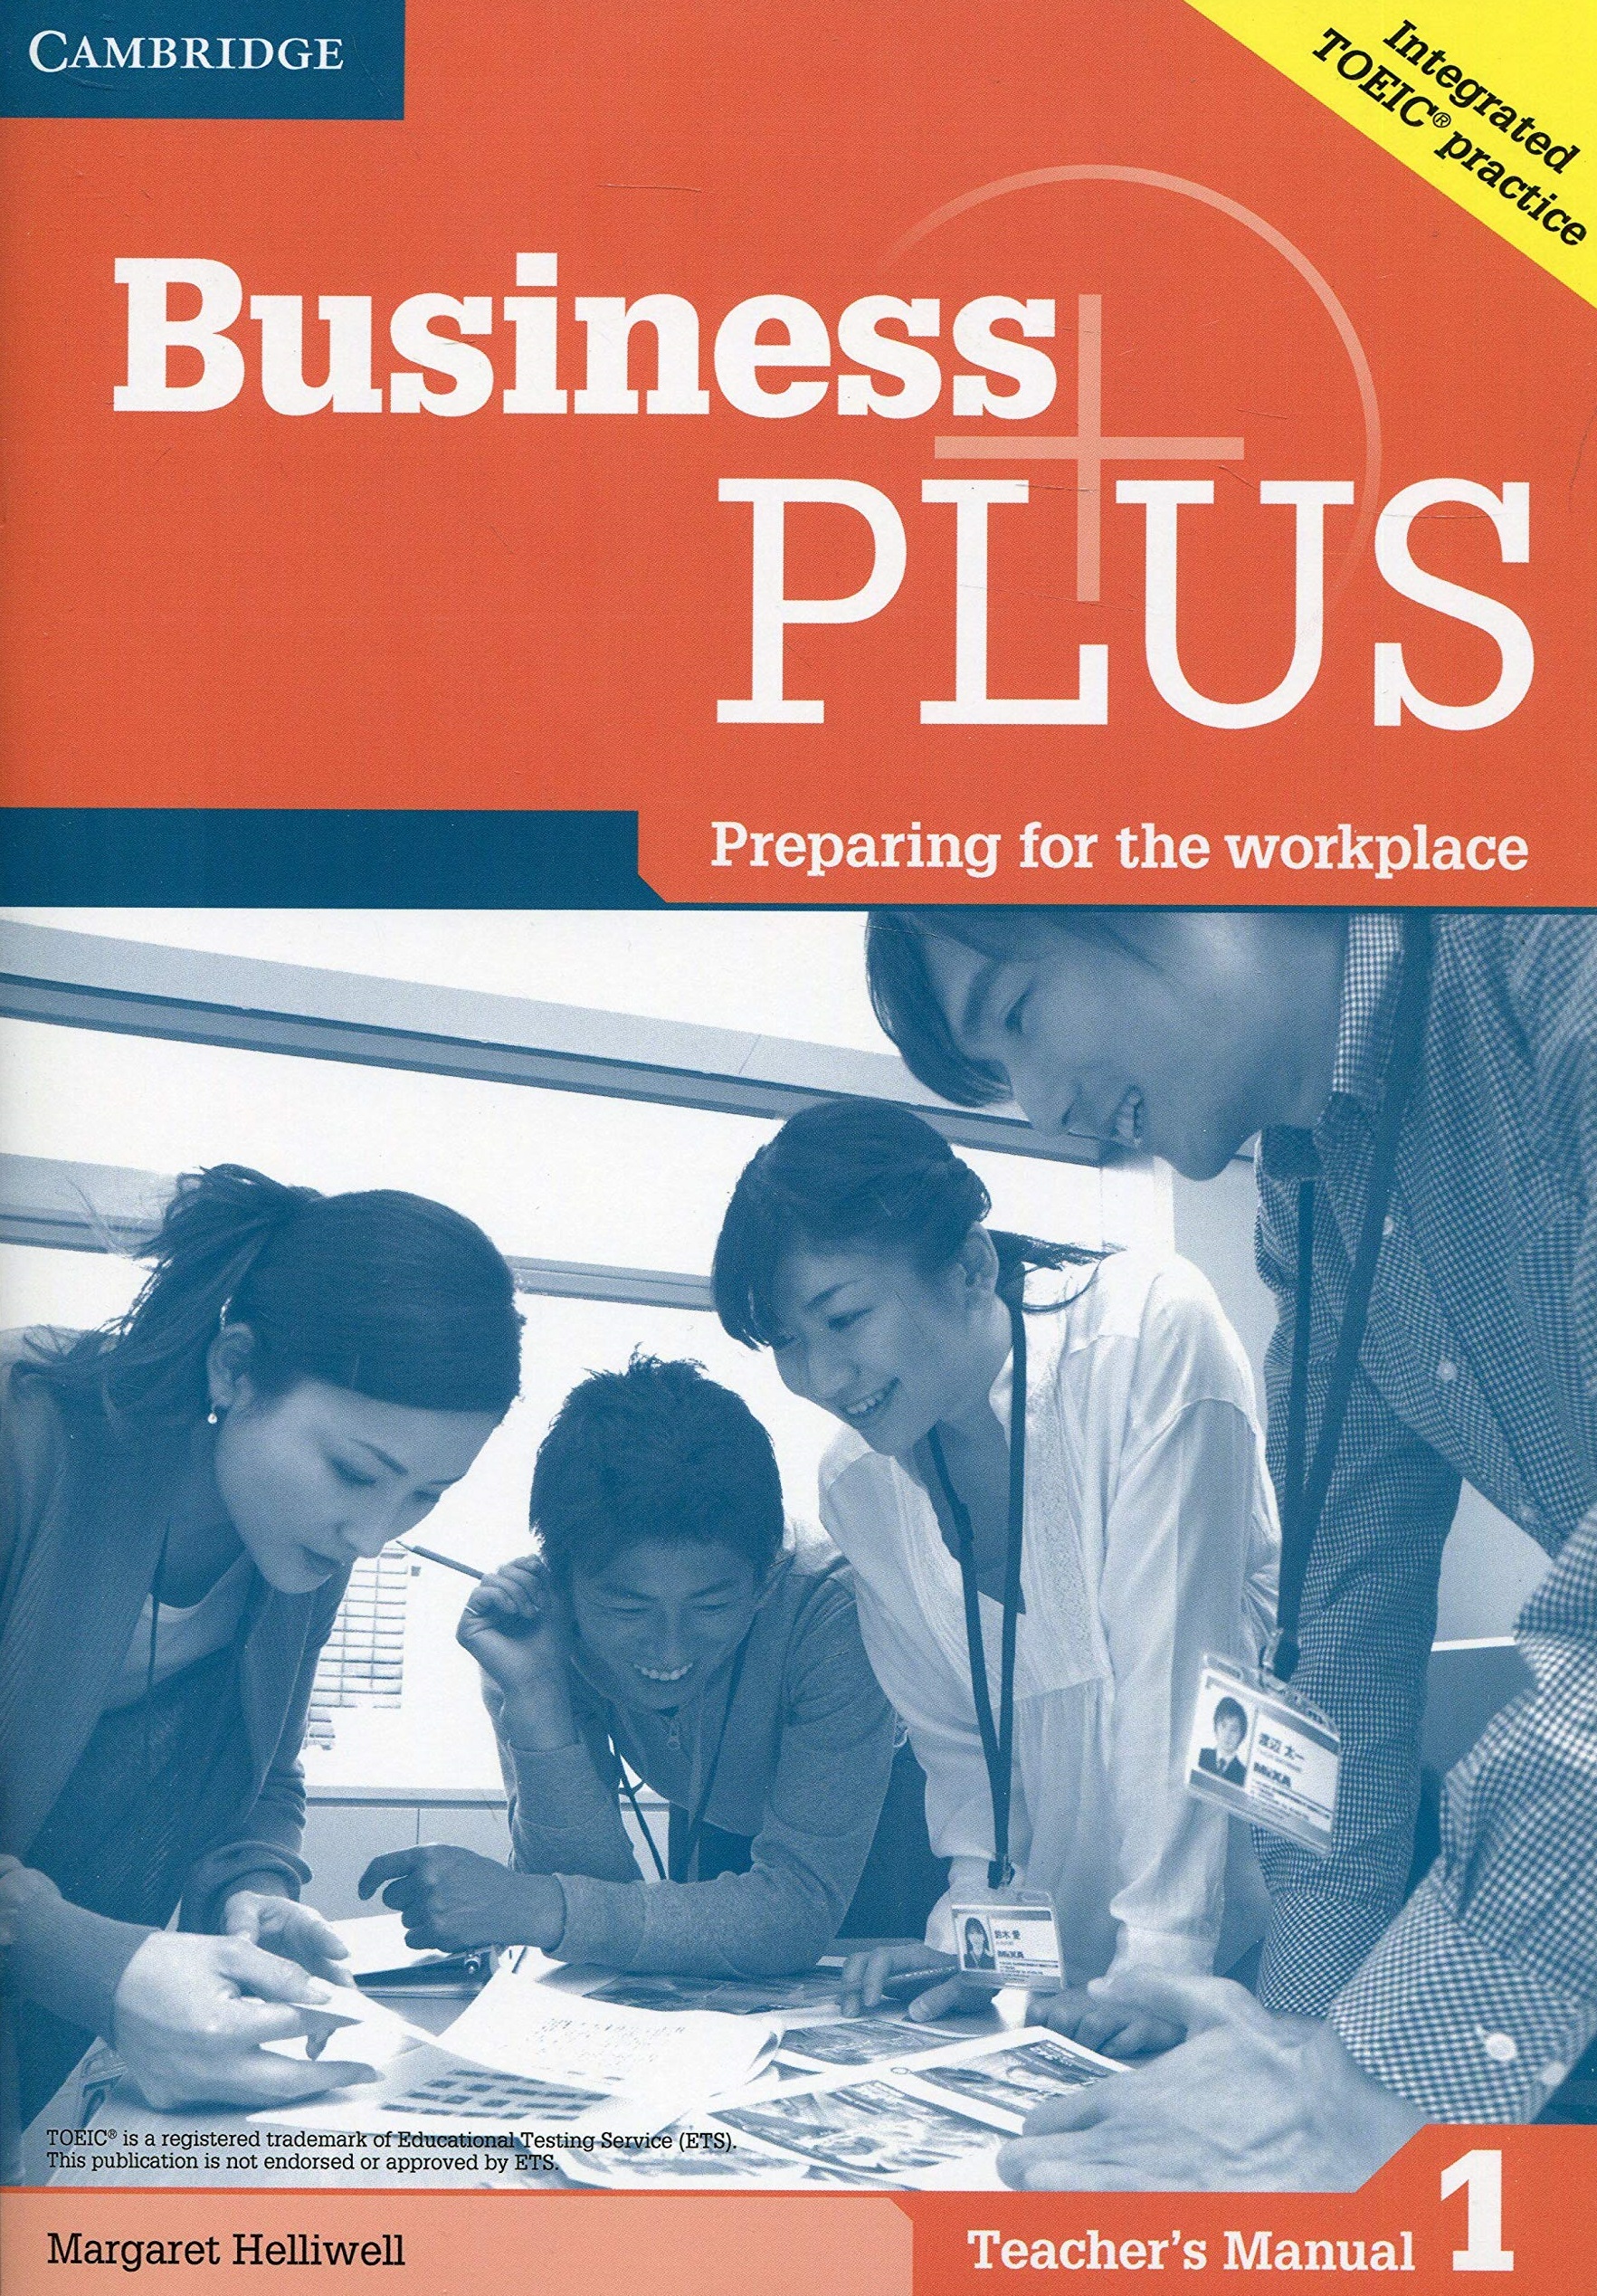 Business English книга. English for Business studies. Cambridge Business English. Бизнес английский учебник Cambridge.